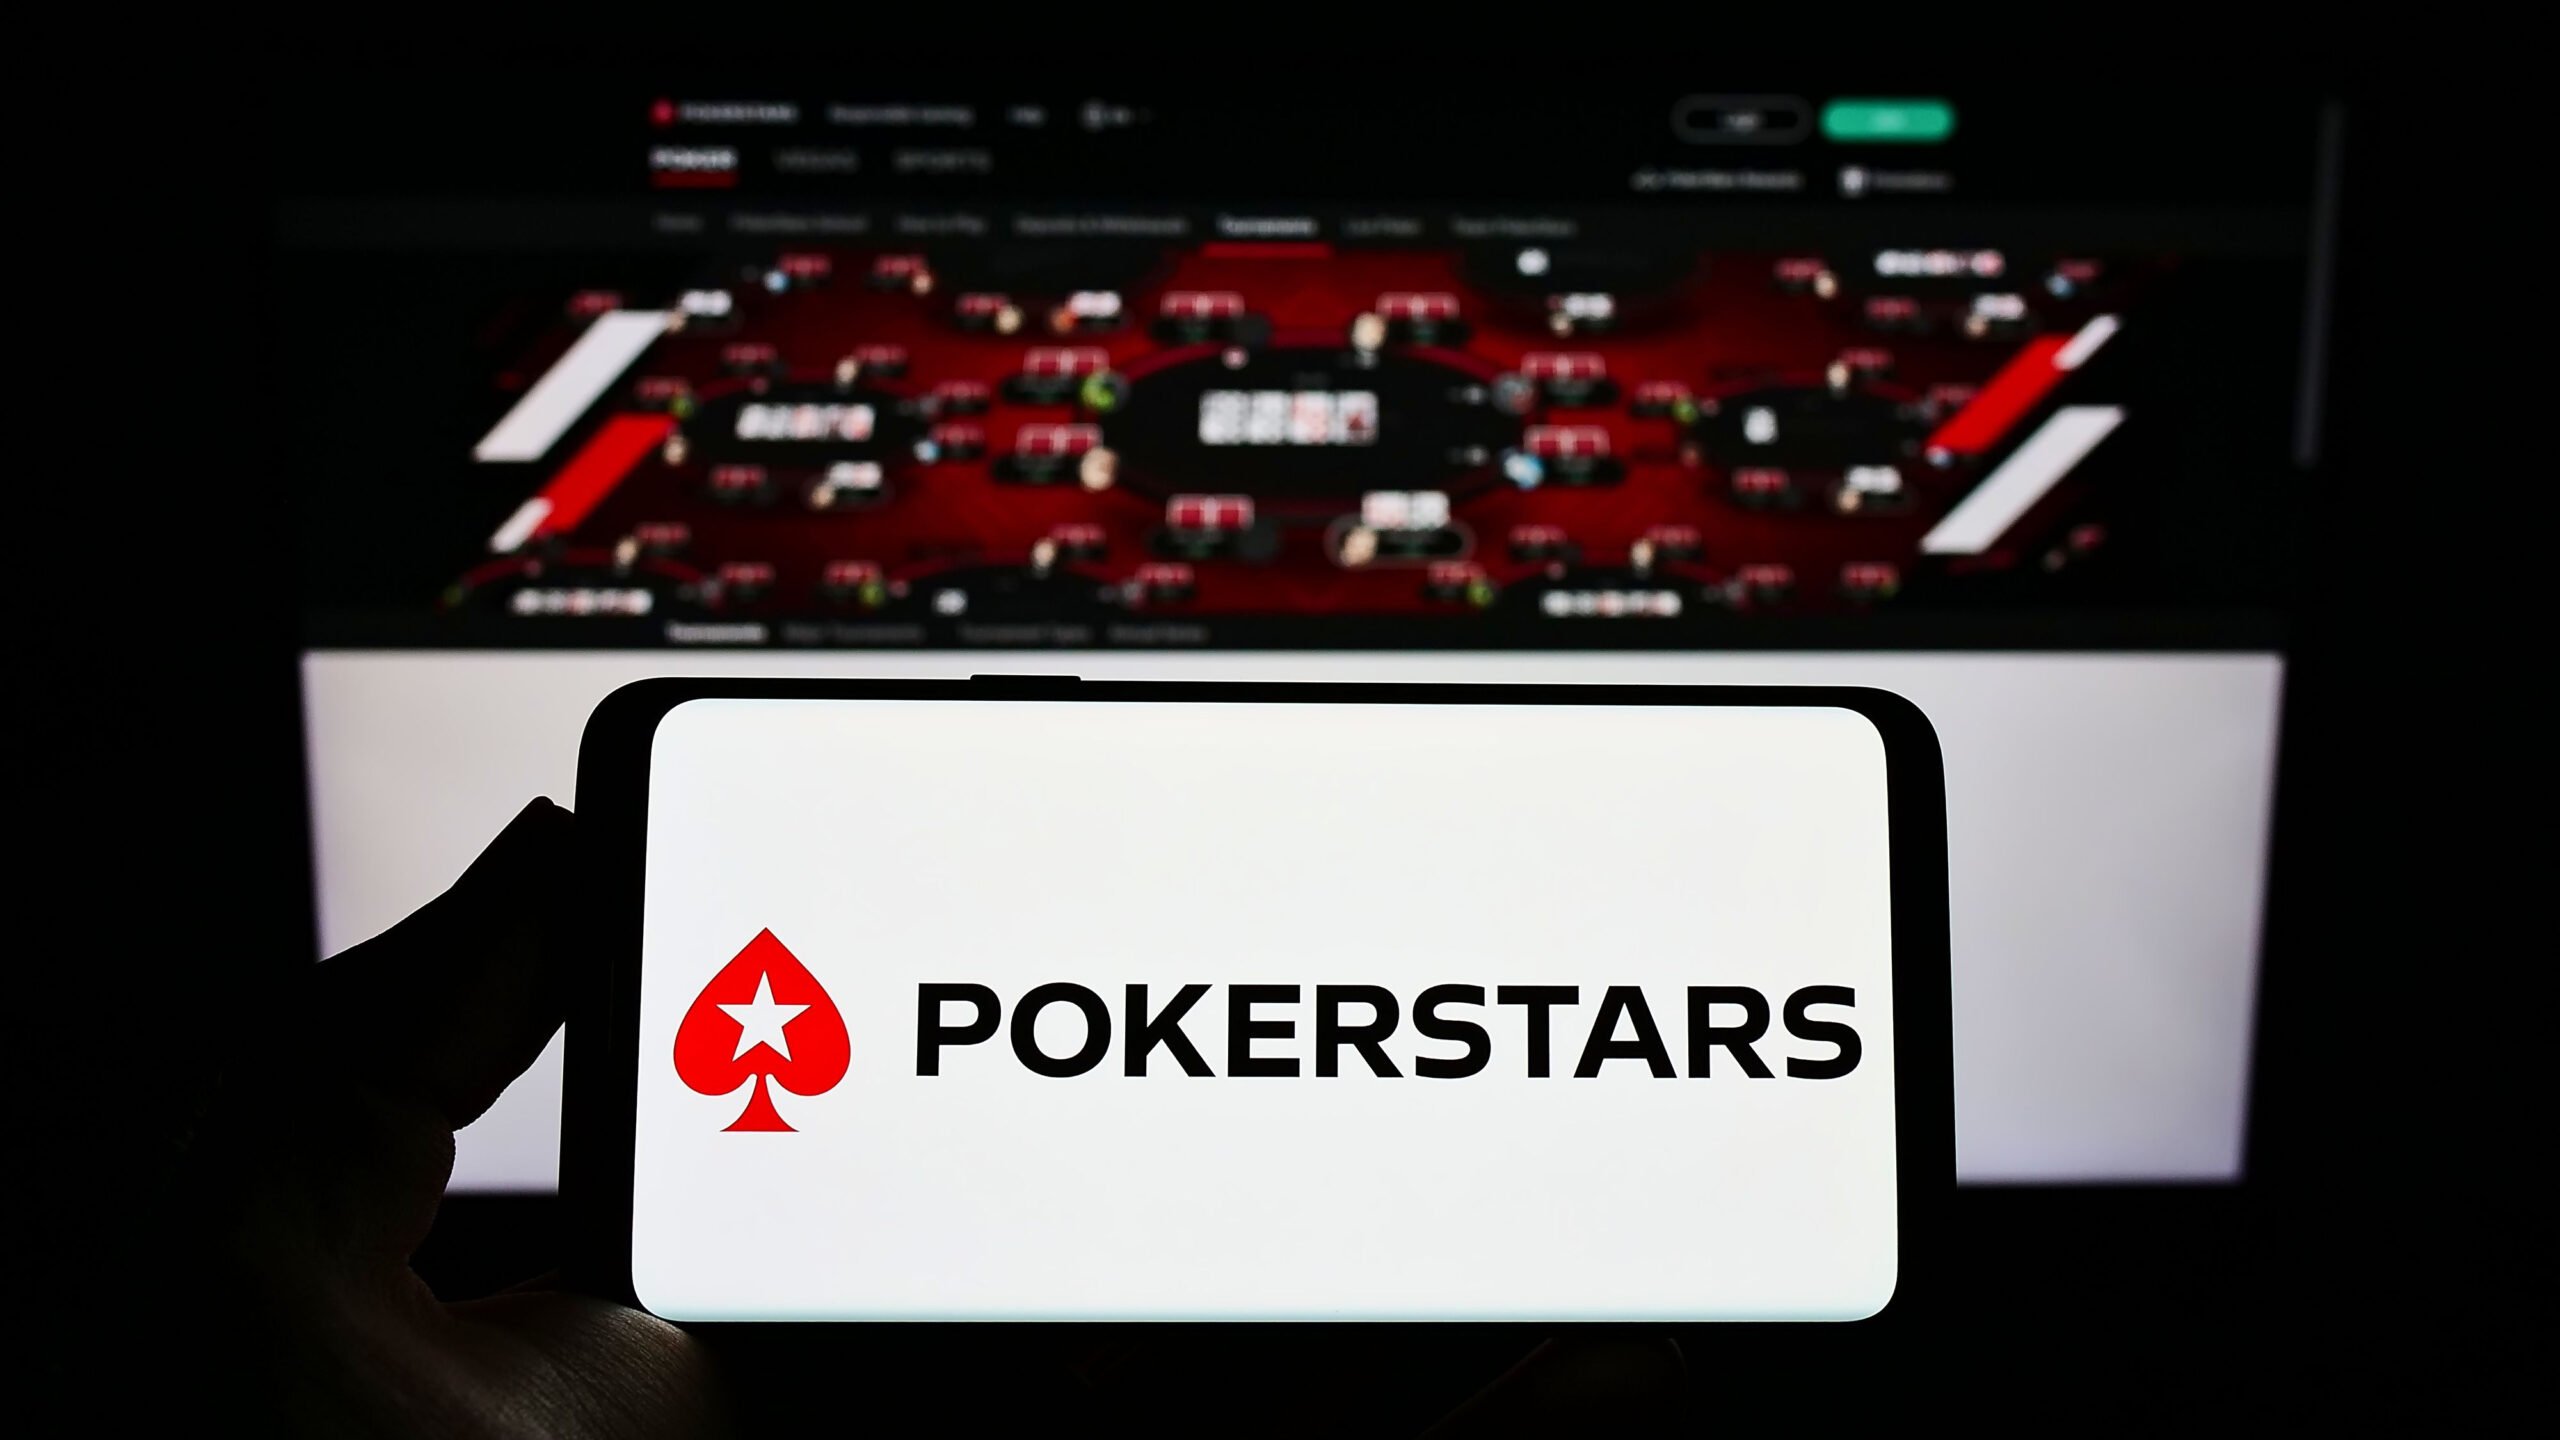 PokerStars splash screen on the phone